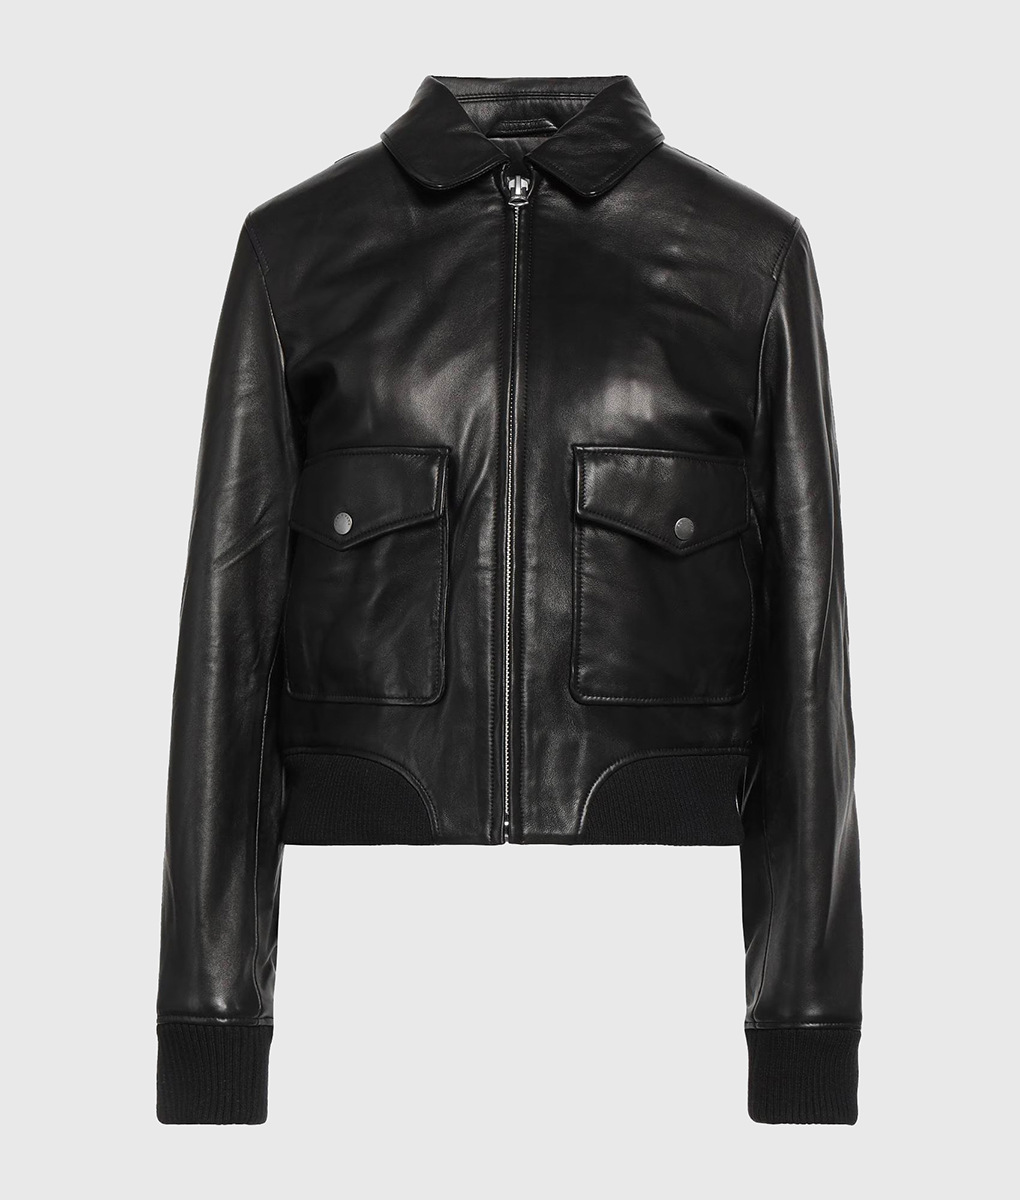 Jennifer Connelly Dark Matter Leather Jacket (2)